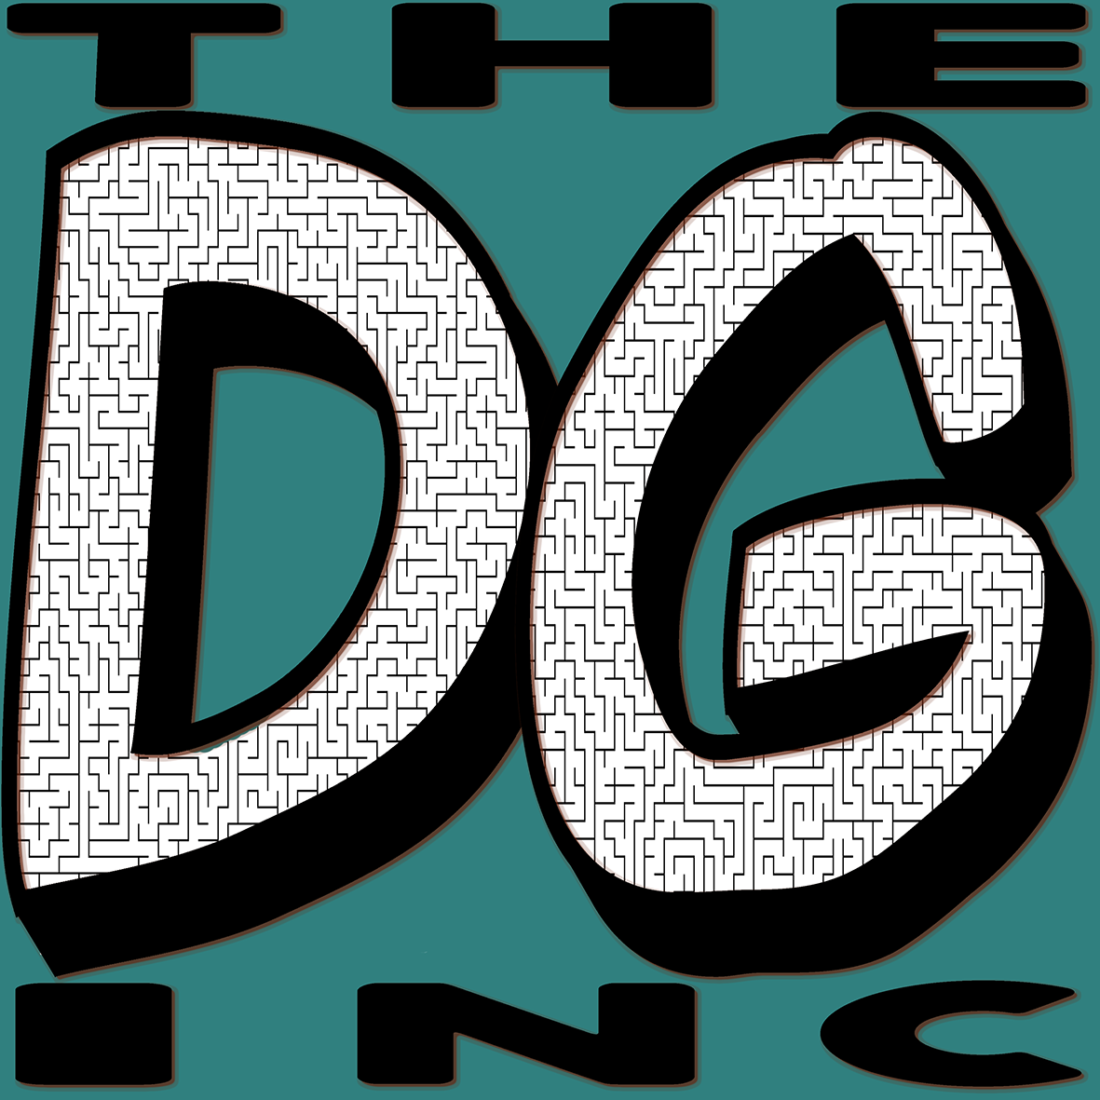 The Daedalus Group Inc